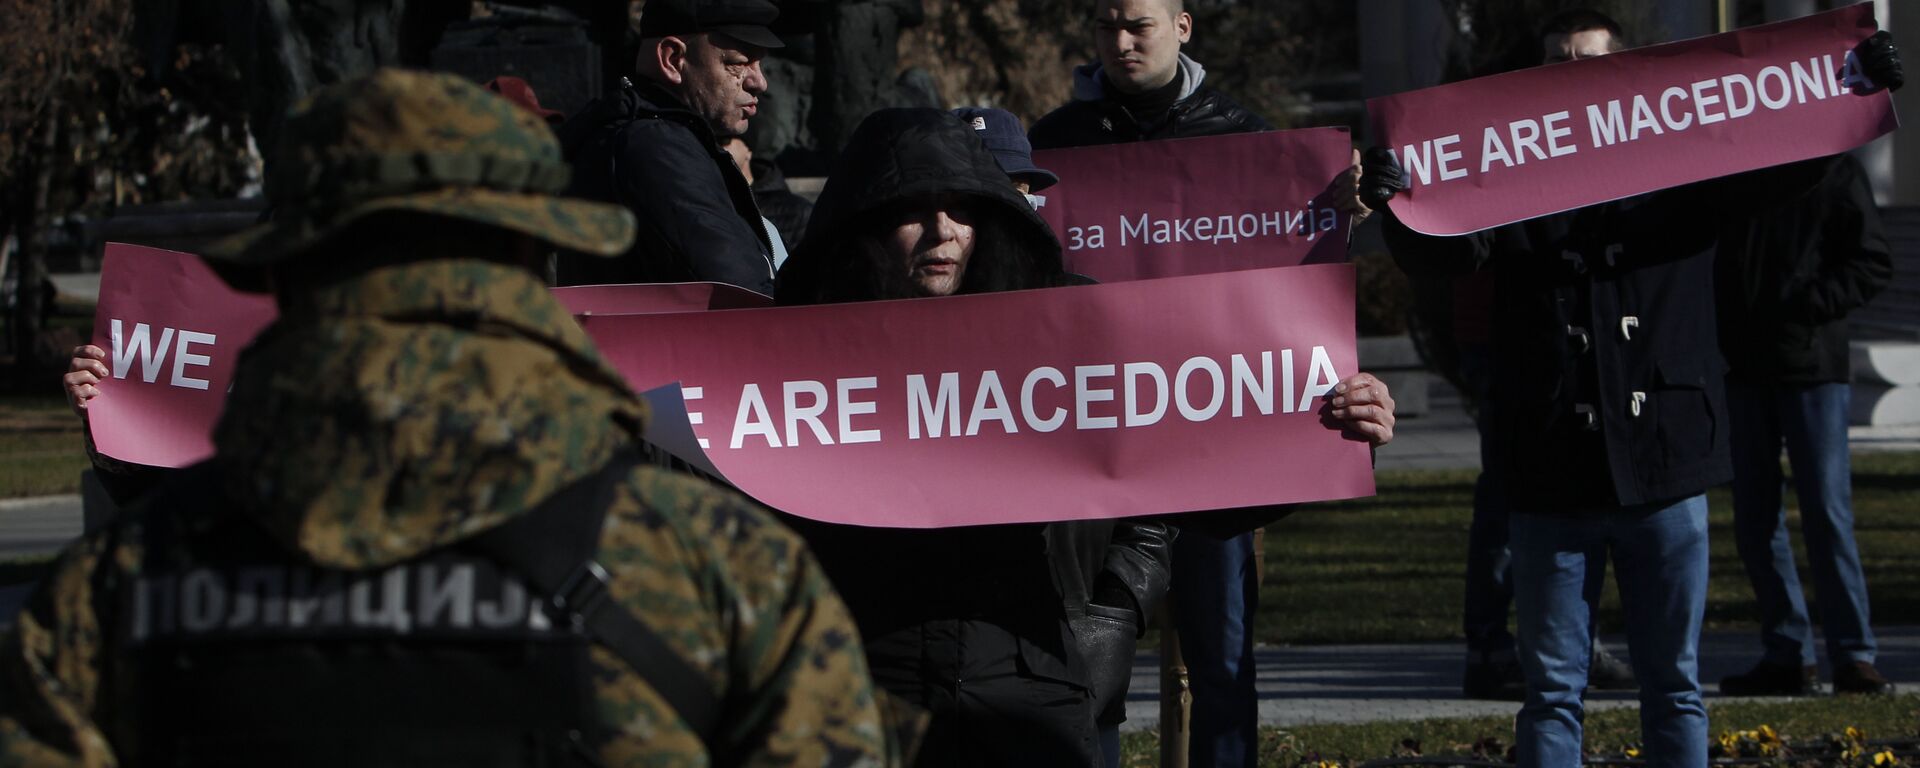 Manifestación en Macedonia - Sputnik Mundo, 1920, 19.06.2018